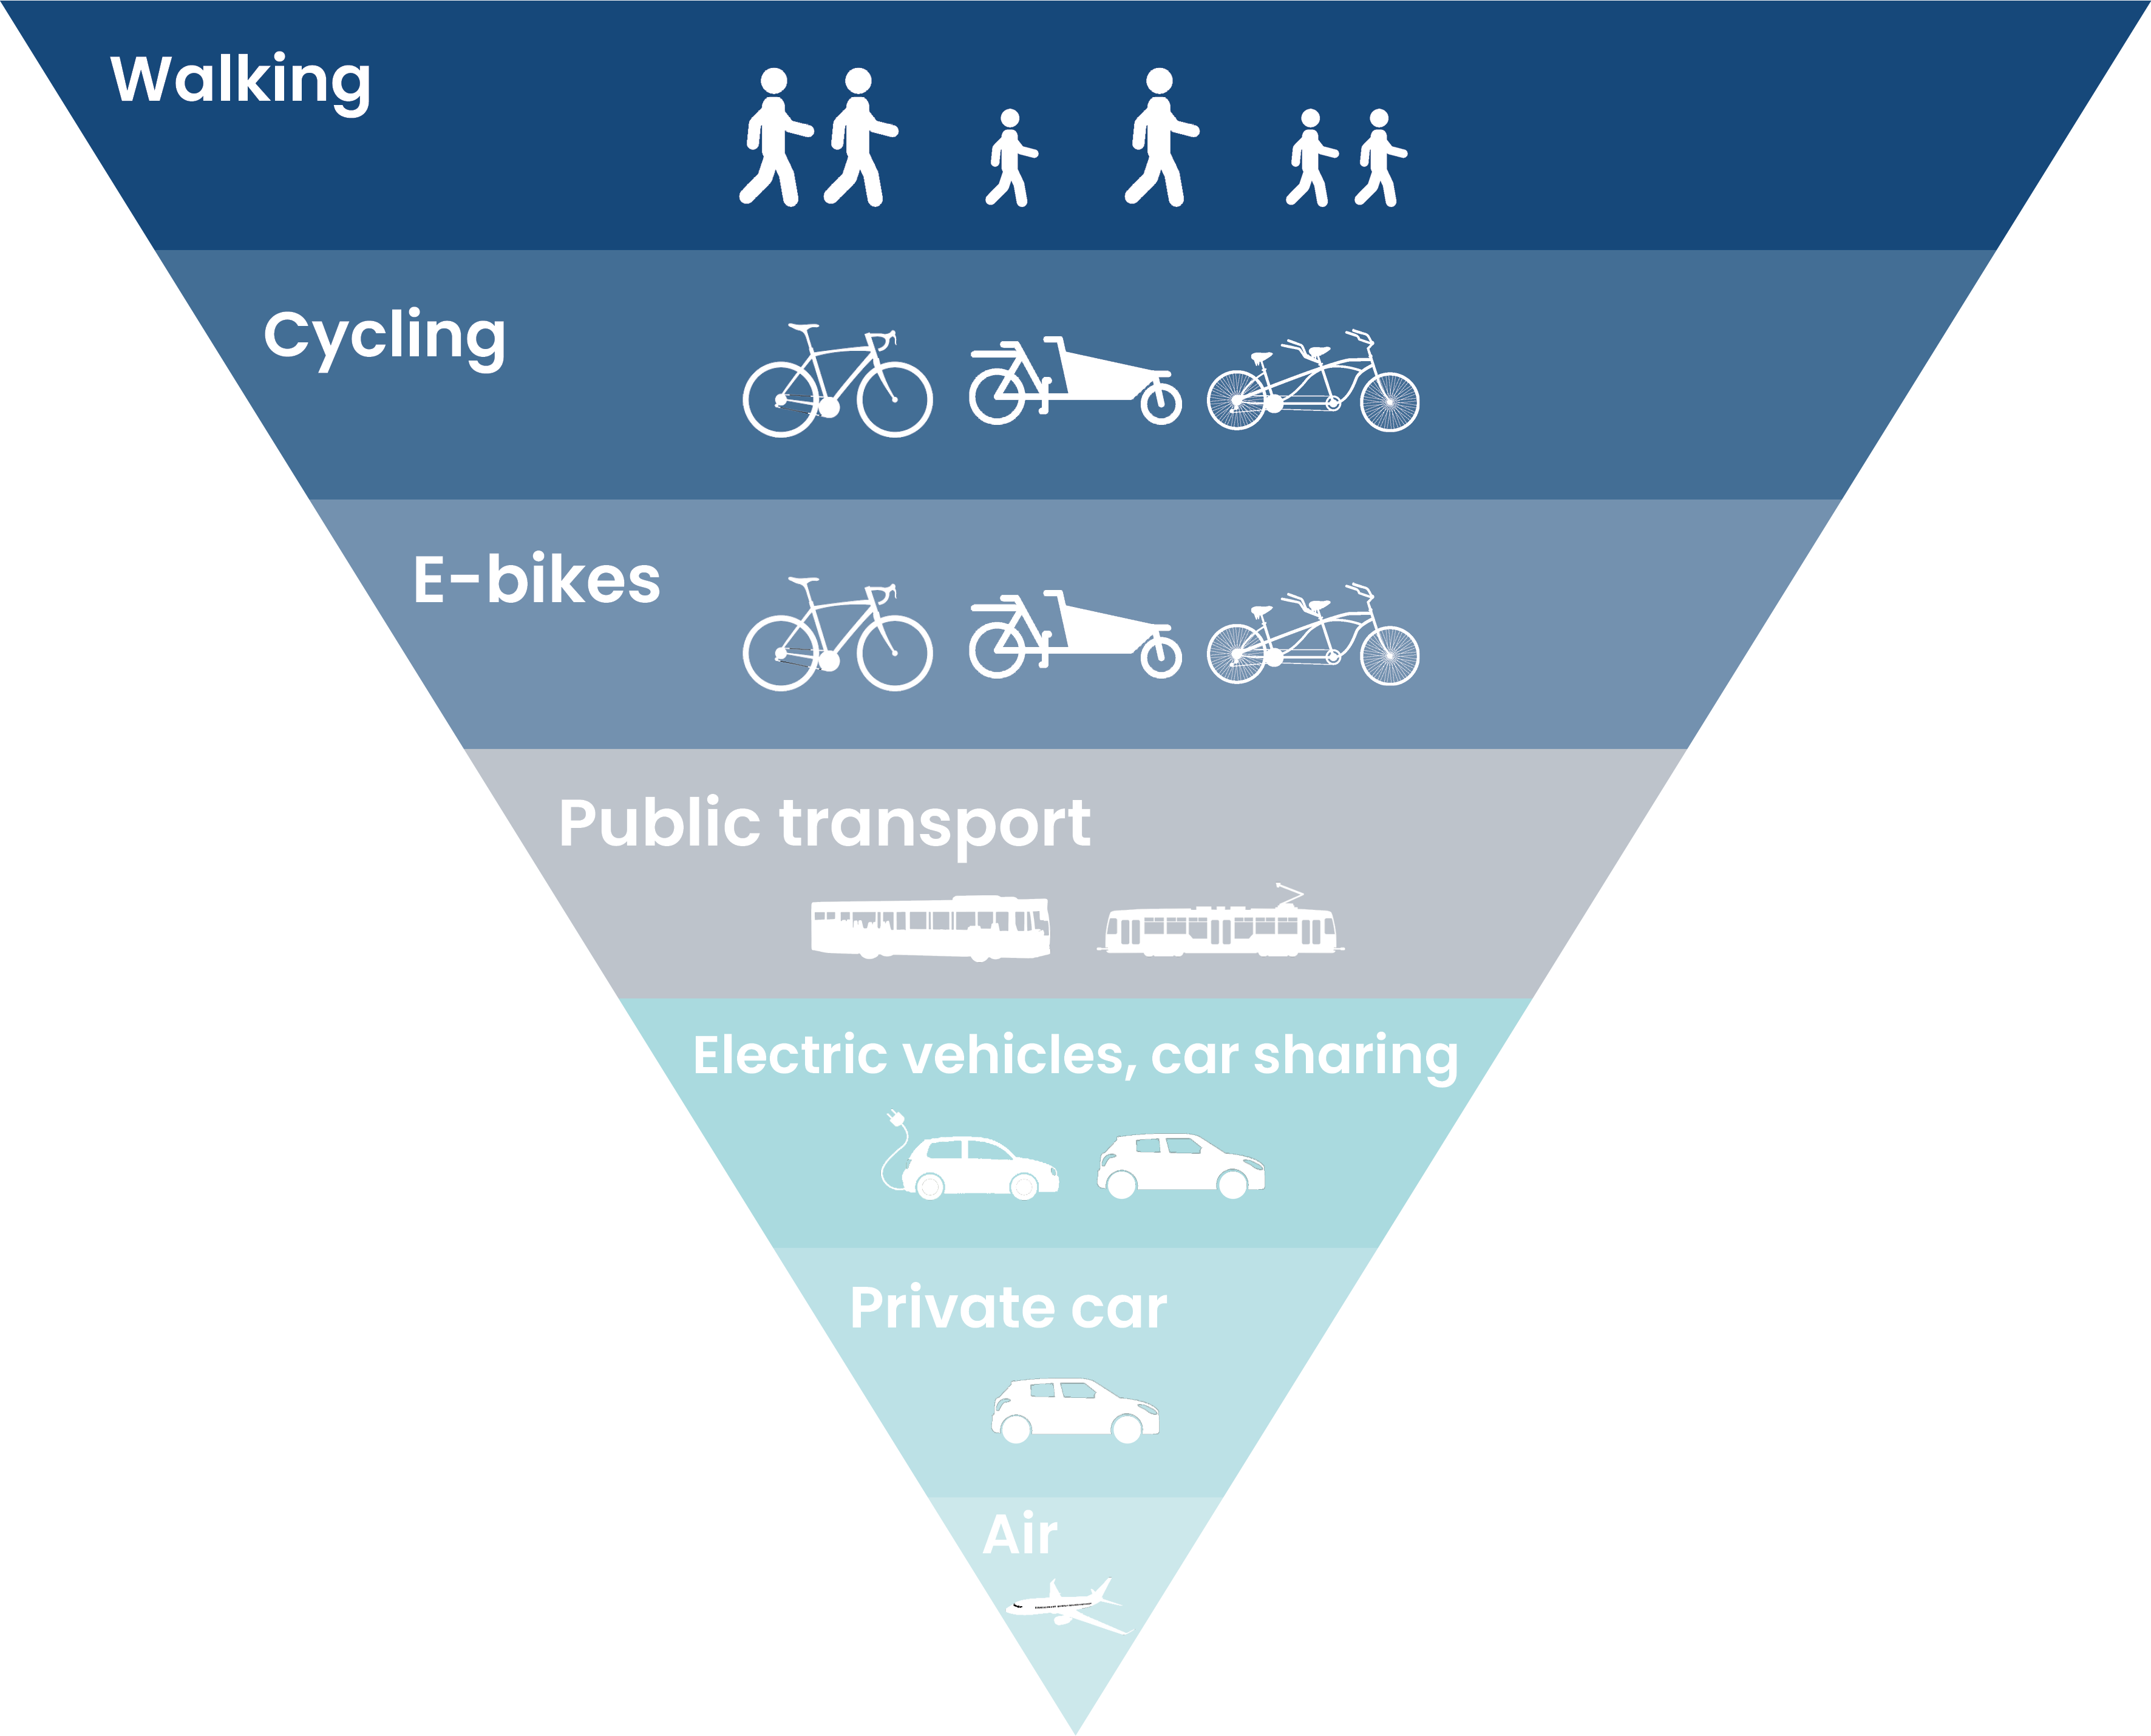 The transport priority pyramid